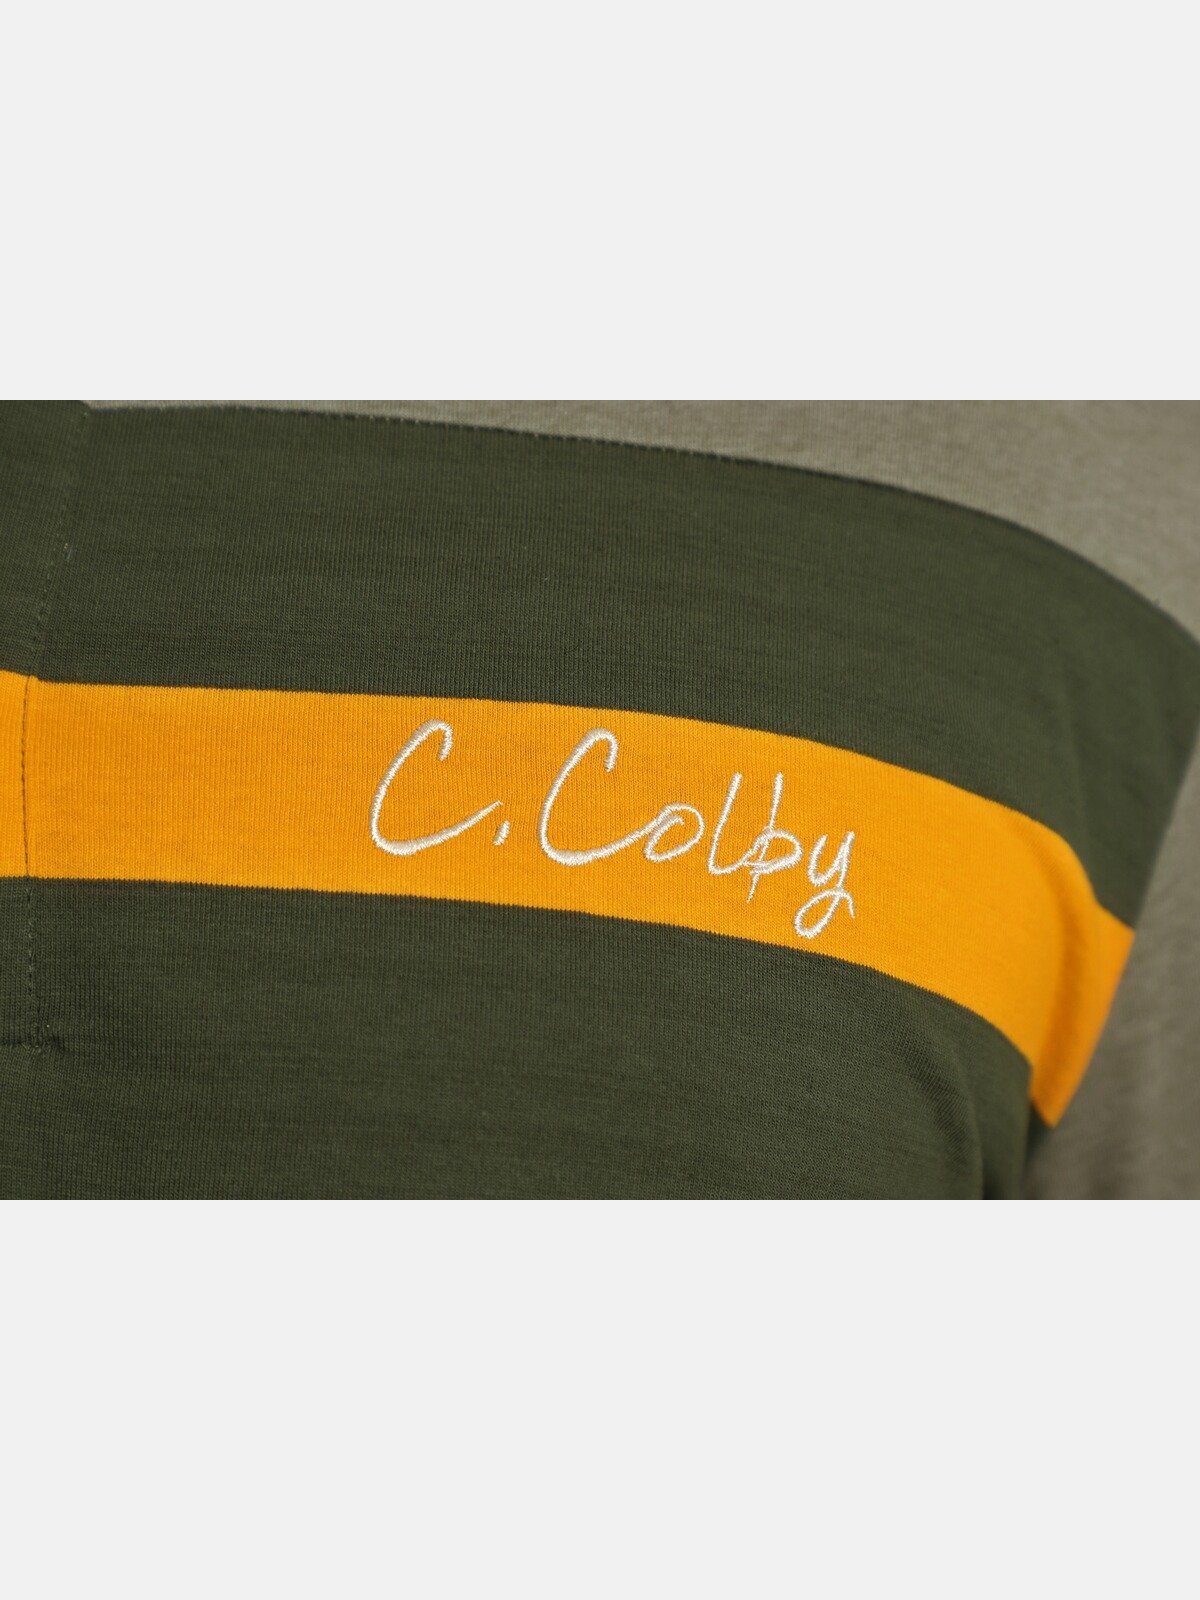 stylisch in Sweatshirt Colby EARL Colour-Blocking GARWY Charles